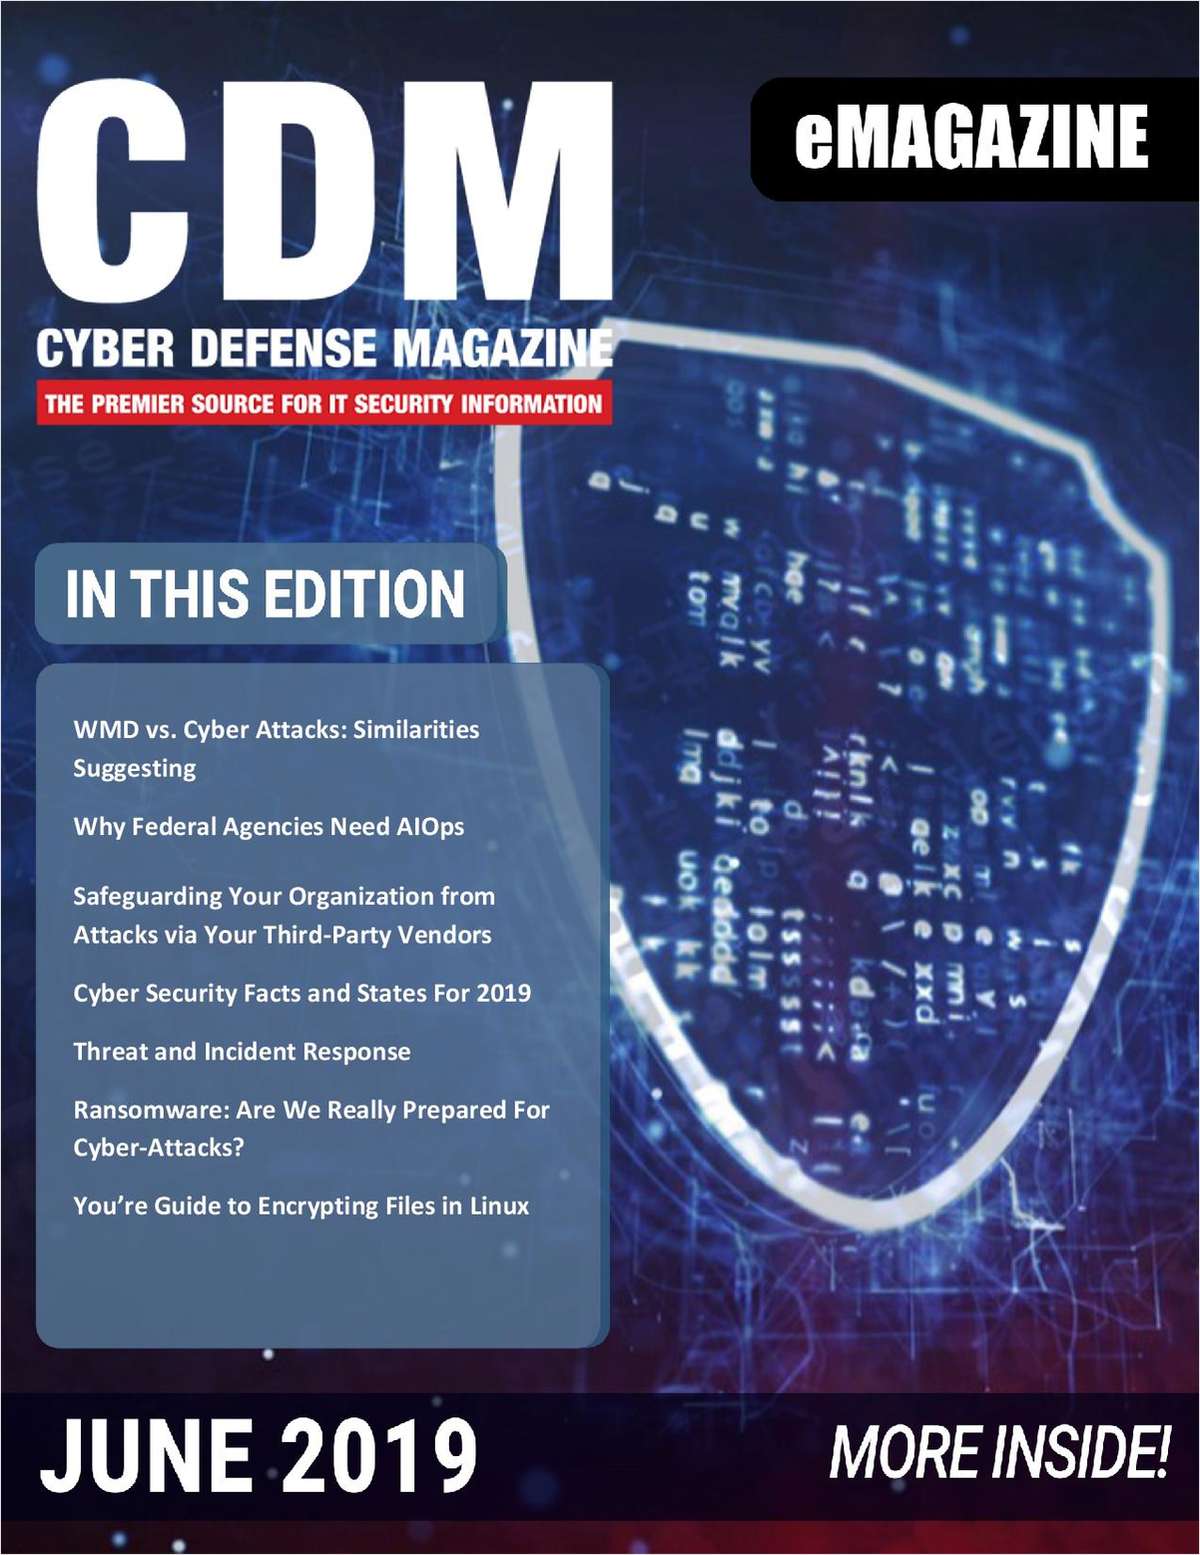 Cyber Defense eMagazine -  June 2019 Edition